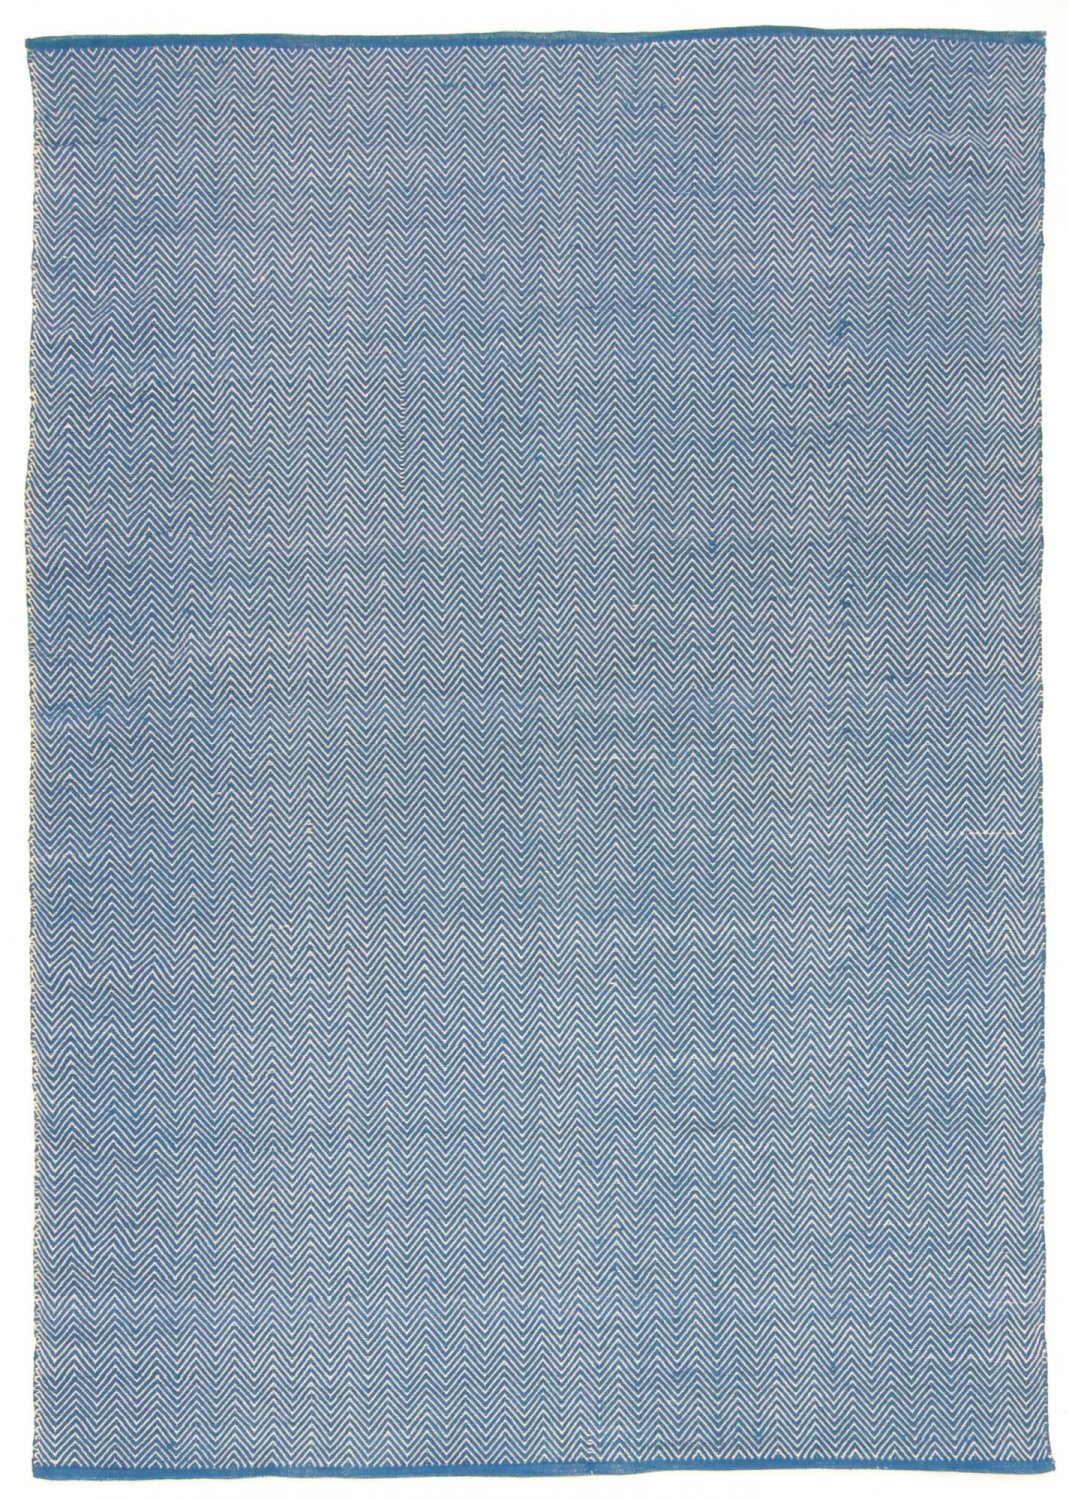 Voddenkleed - Marina (blauw)